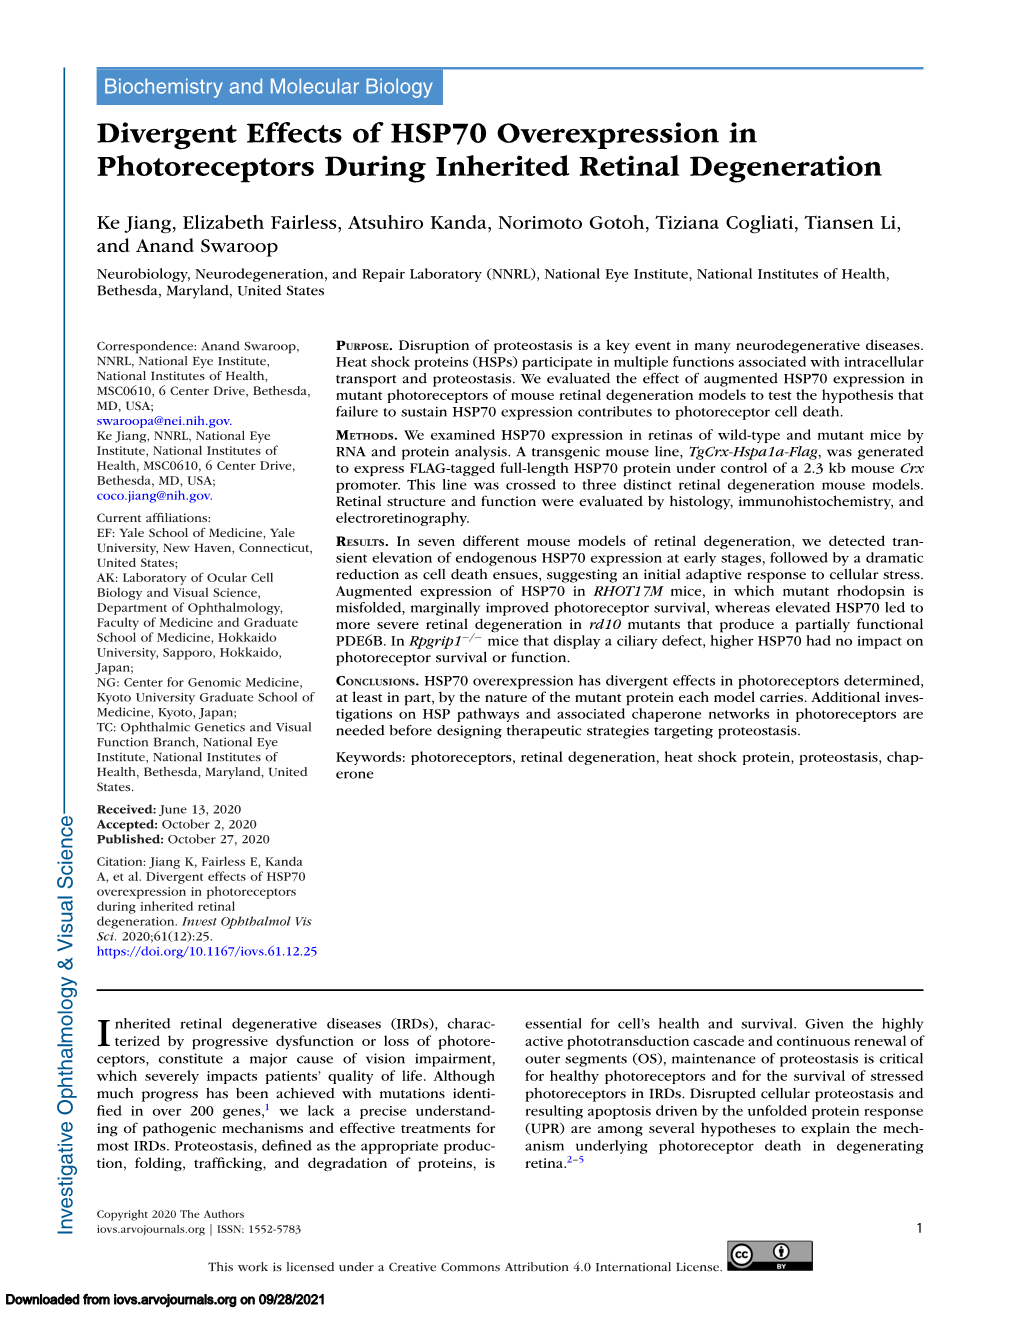 Divergent Effects of HSP70 Overexpression in Photoreceptors During Inherited Retinal Degeneration